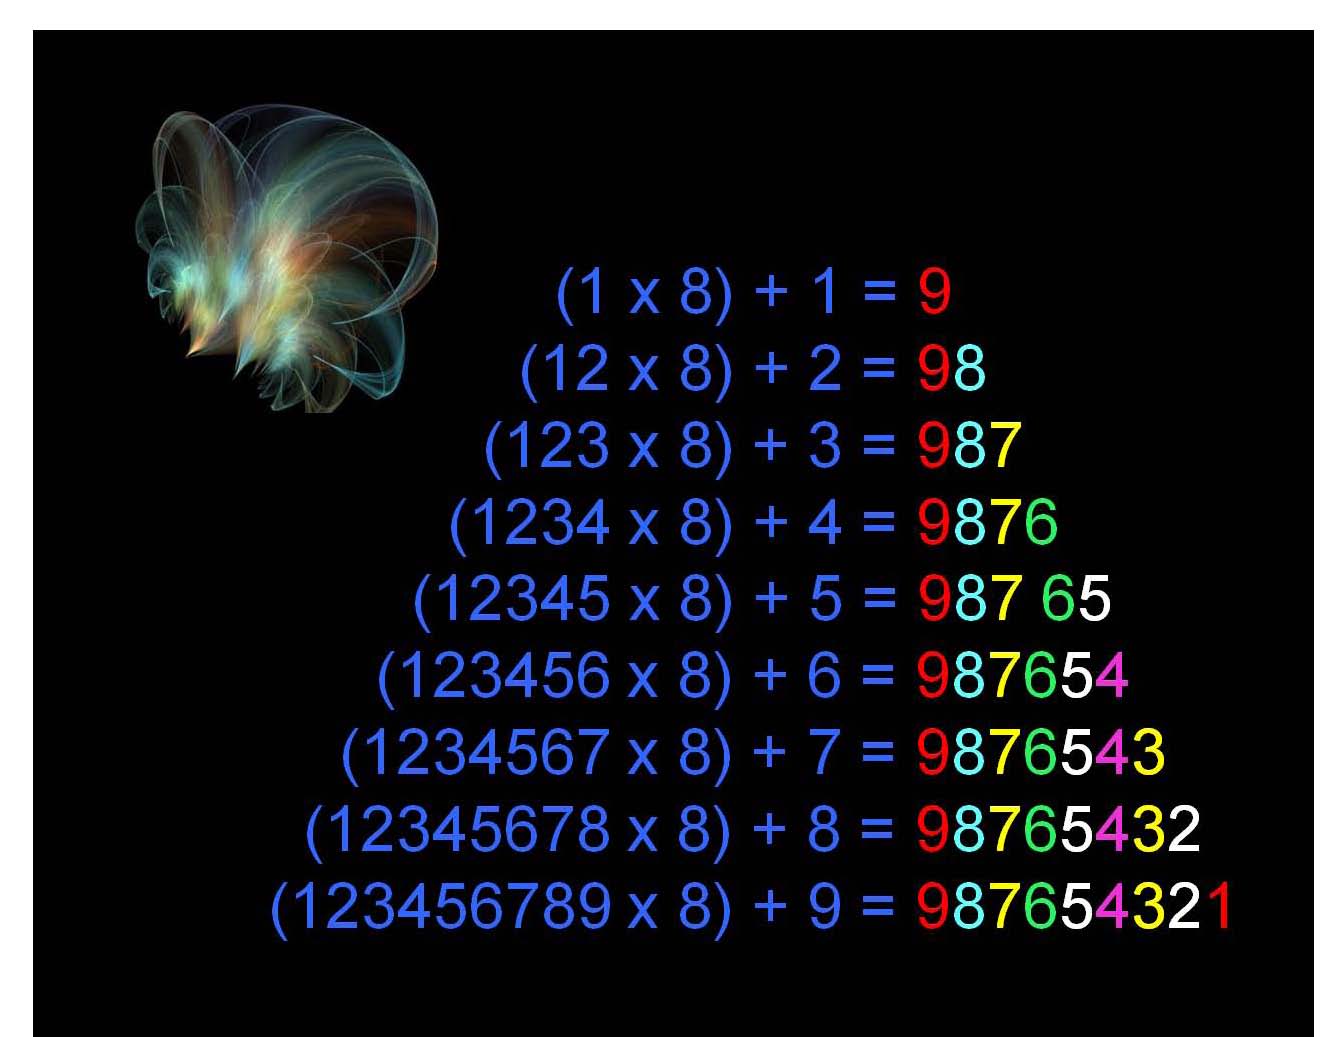 Peninfinite Symmedy http://budjiesthoughts.blogspot.com/2011/05/incredible-math.html